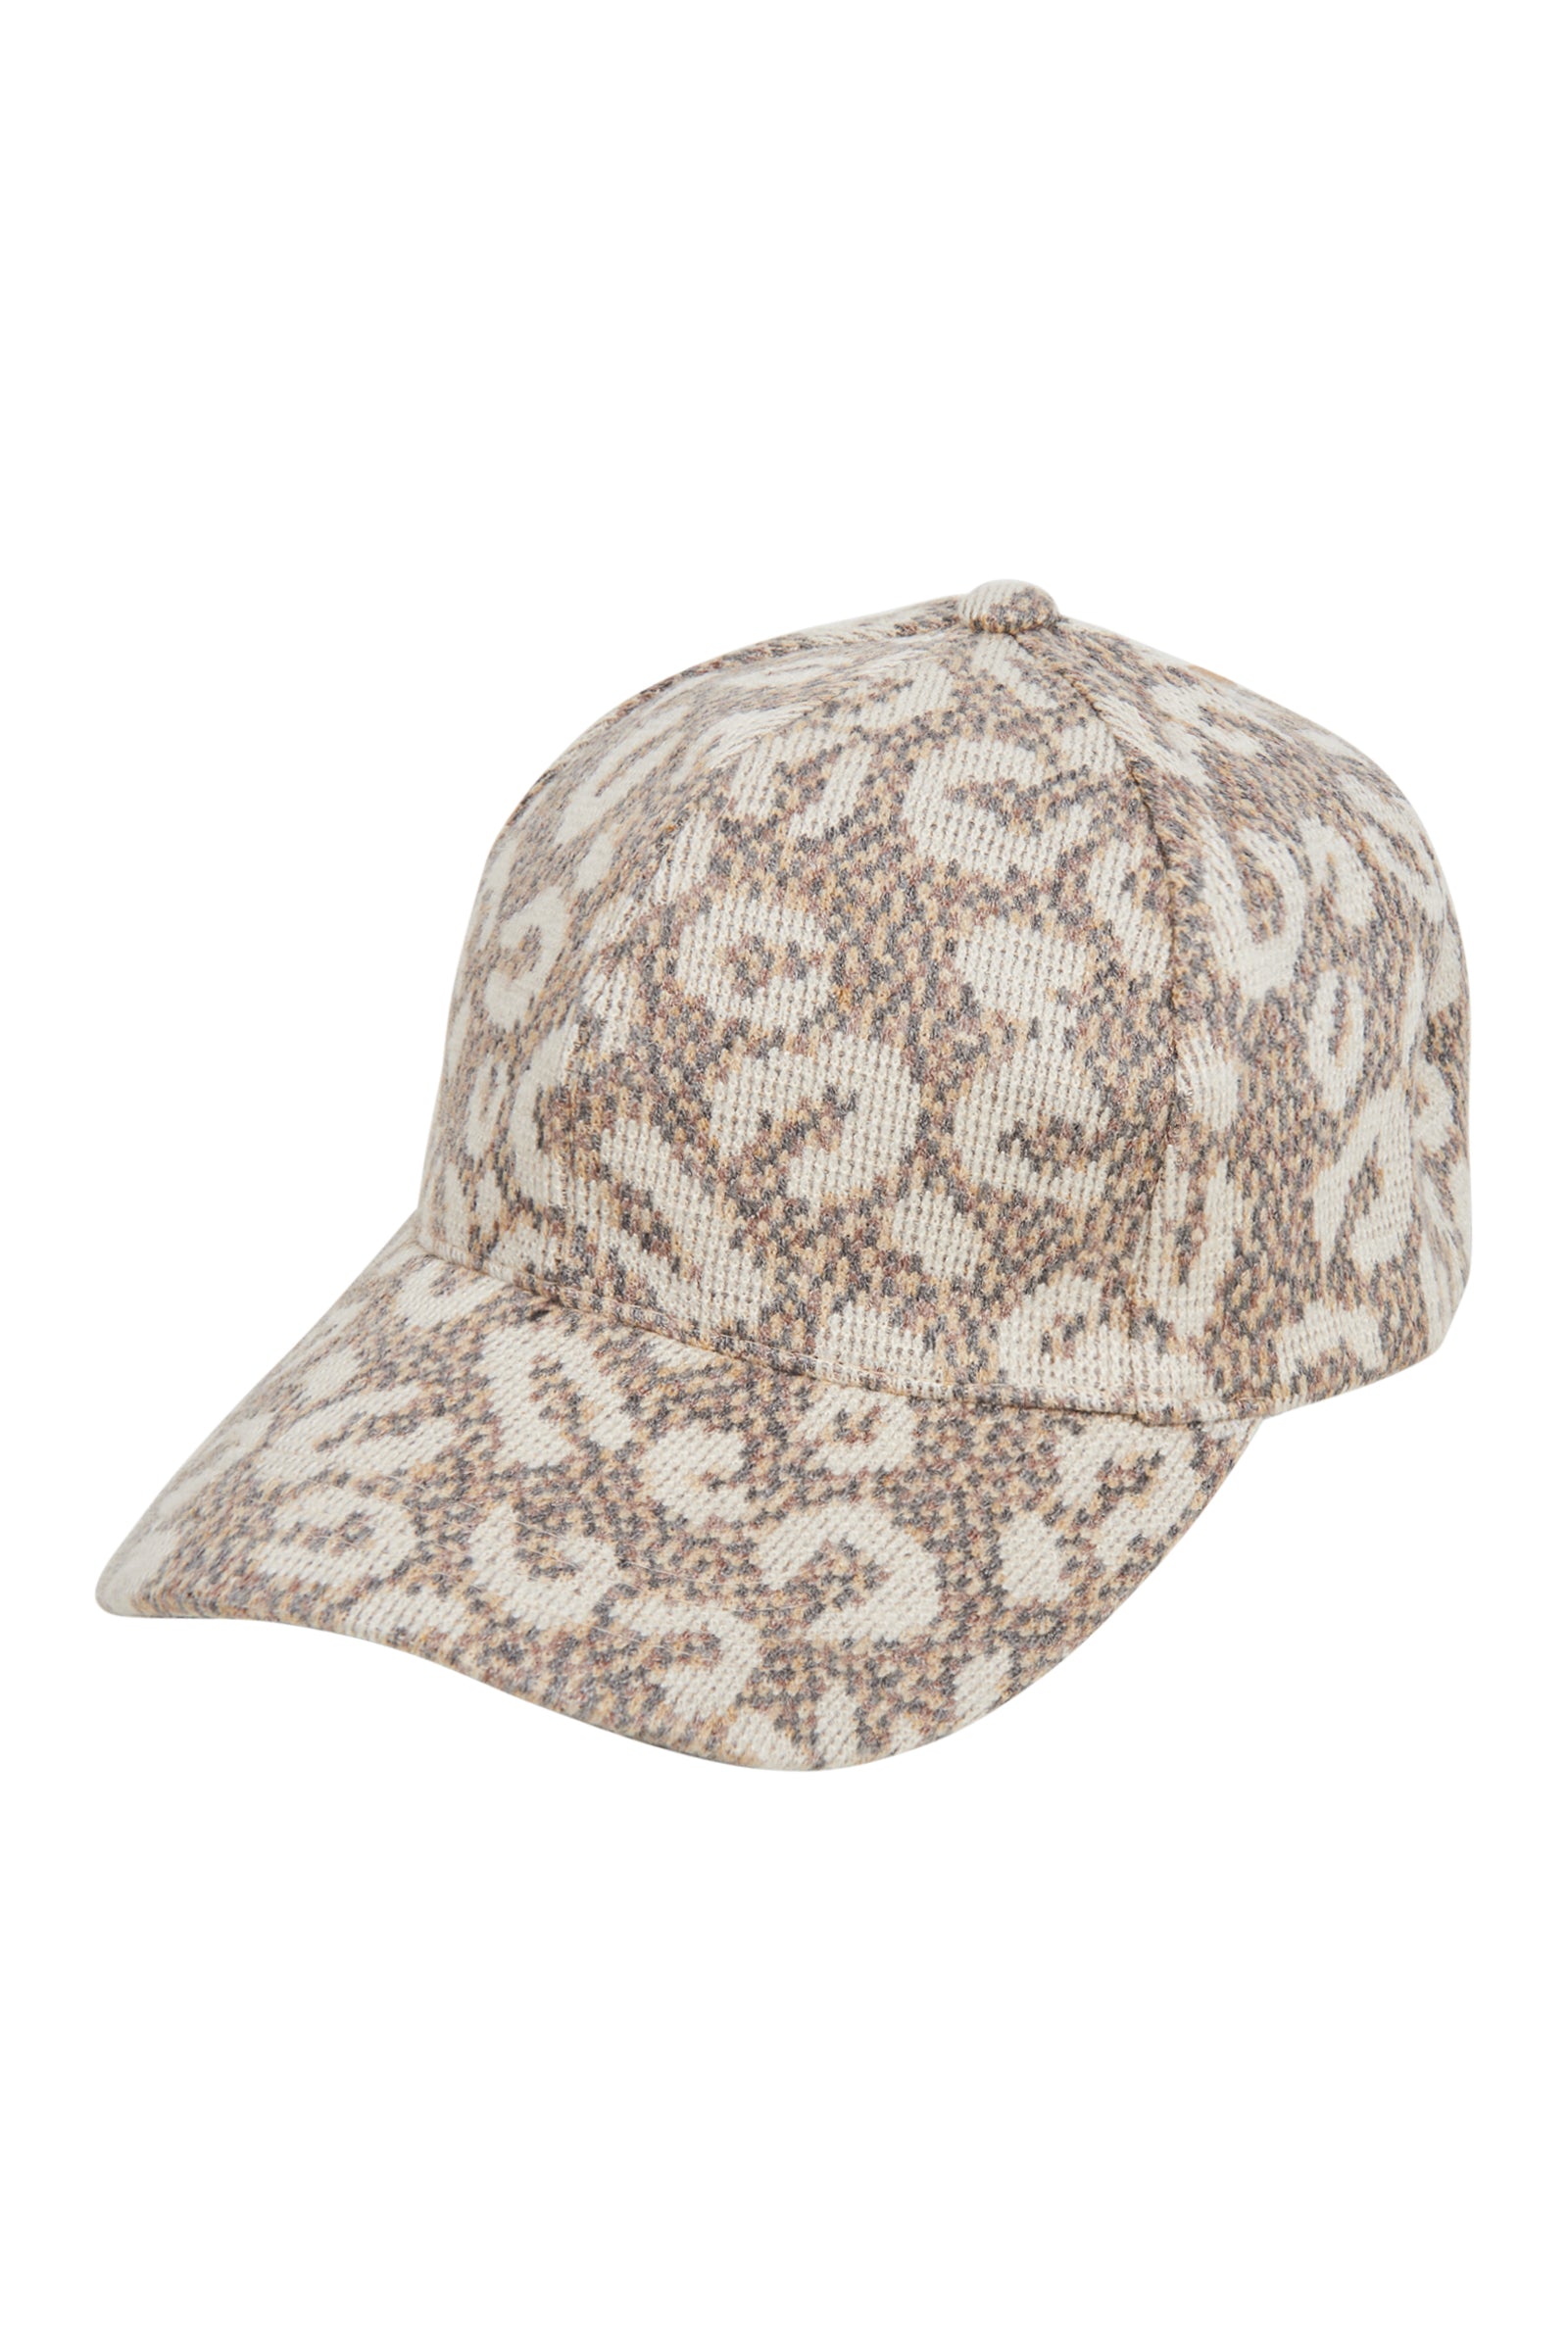 Pilbara Cap - Vanilla - eb&ive Hat